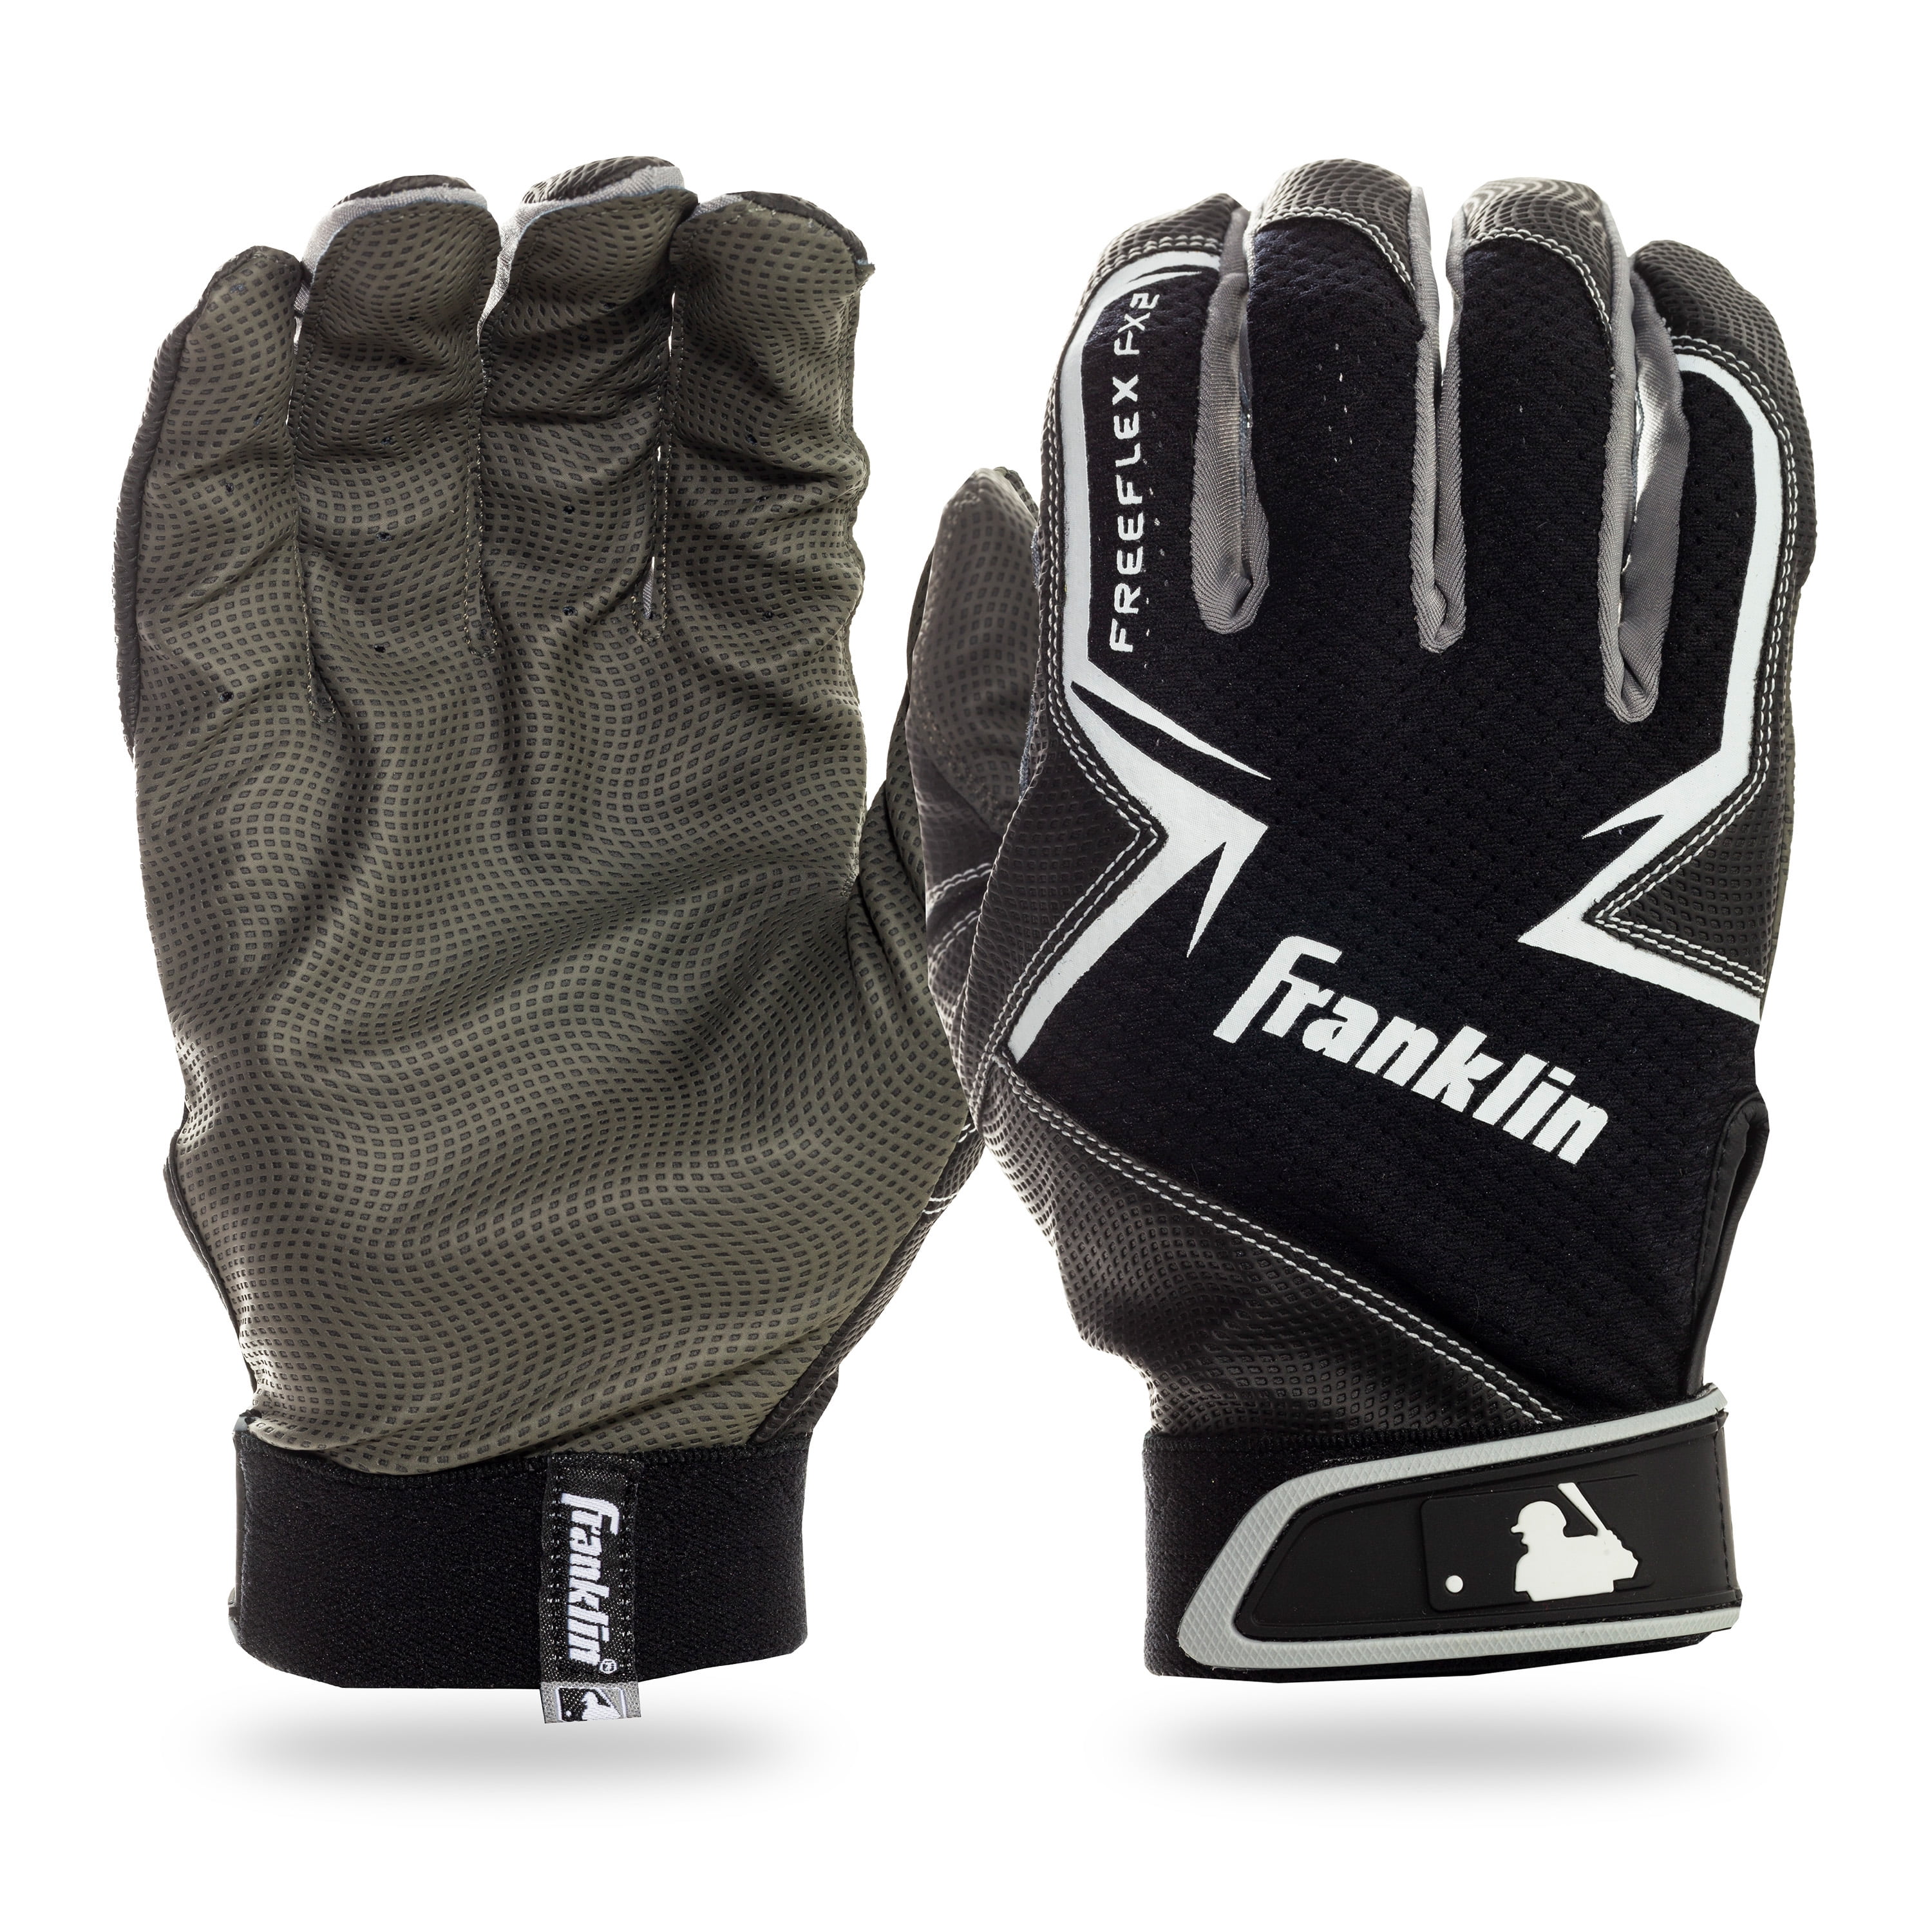 Franklin Freeflex Batting Gloves Youth Extra Small 